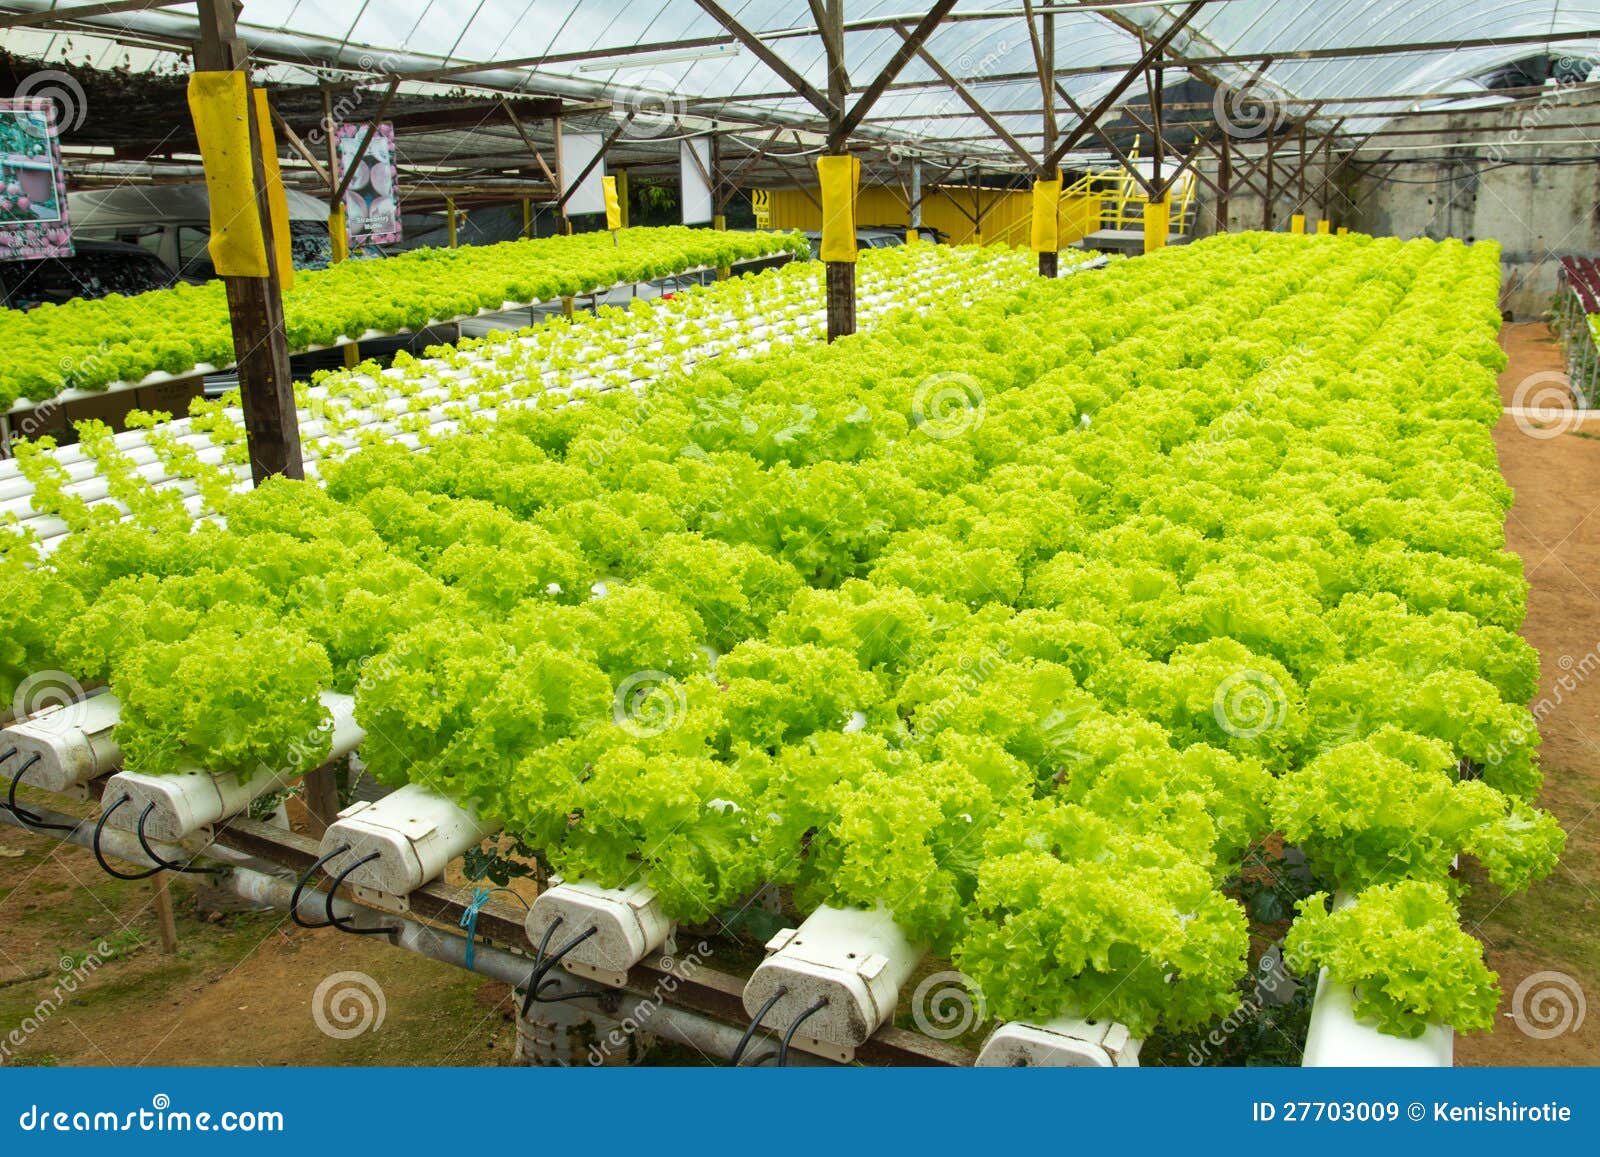 hydroponic vegetable farm